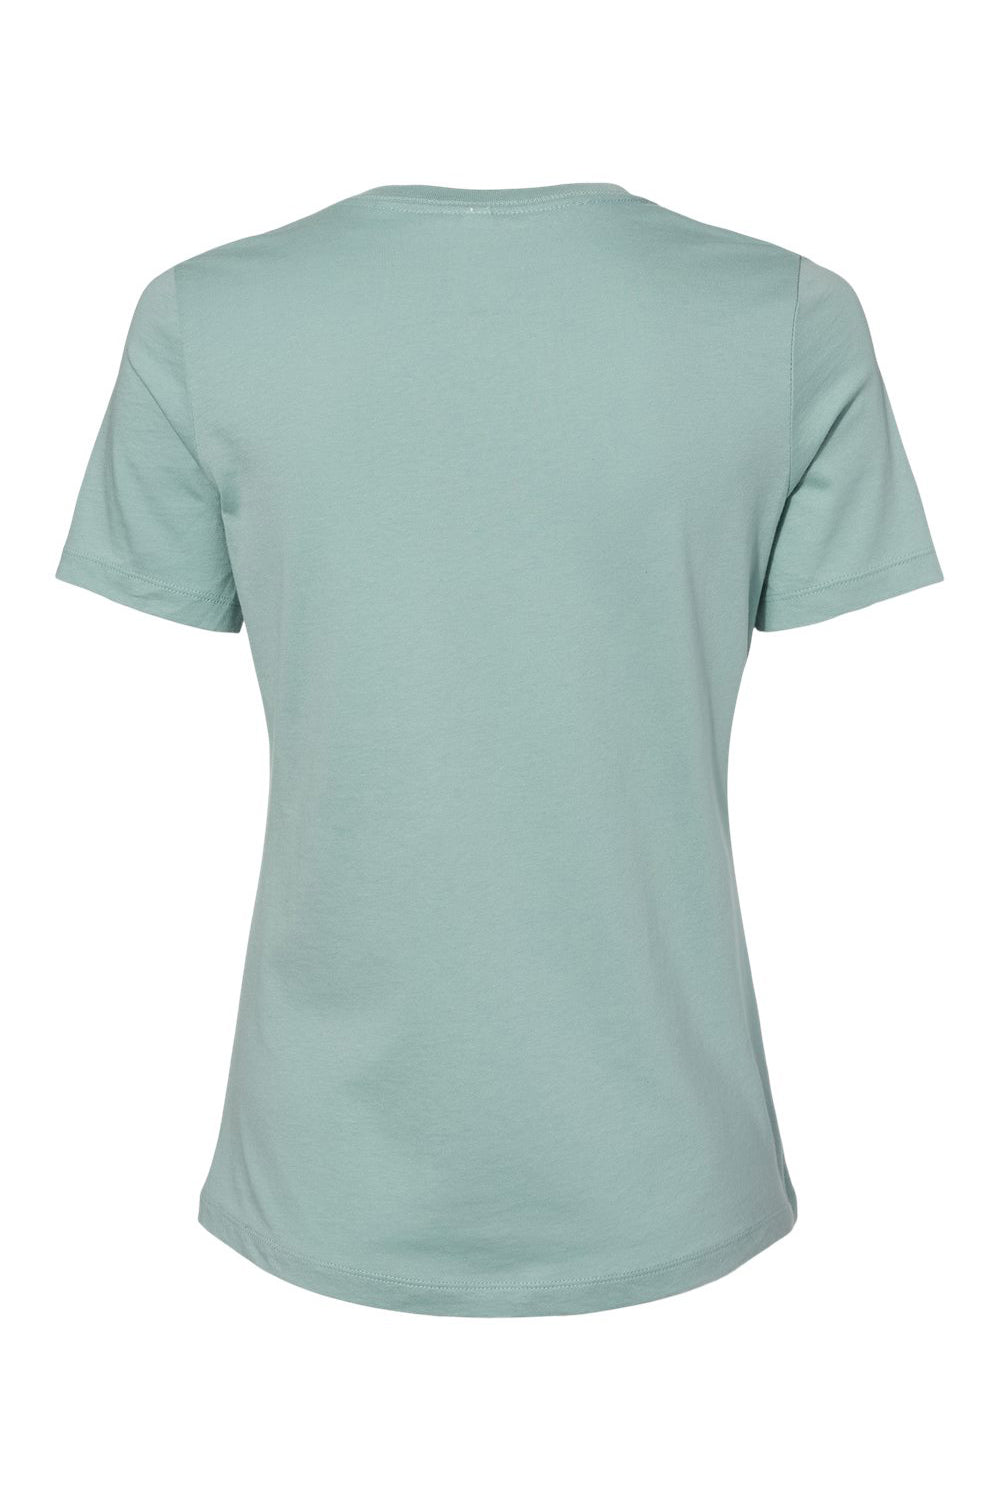 Bella + Canvas BC6400/B6400/6400 Womens Relaxed Jersey Short Sleeve Crewneck T-Shirt Dusty Blue Flat Back